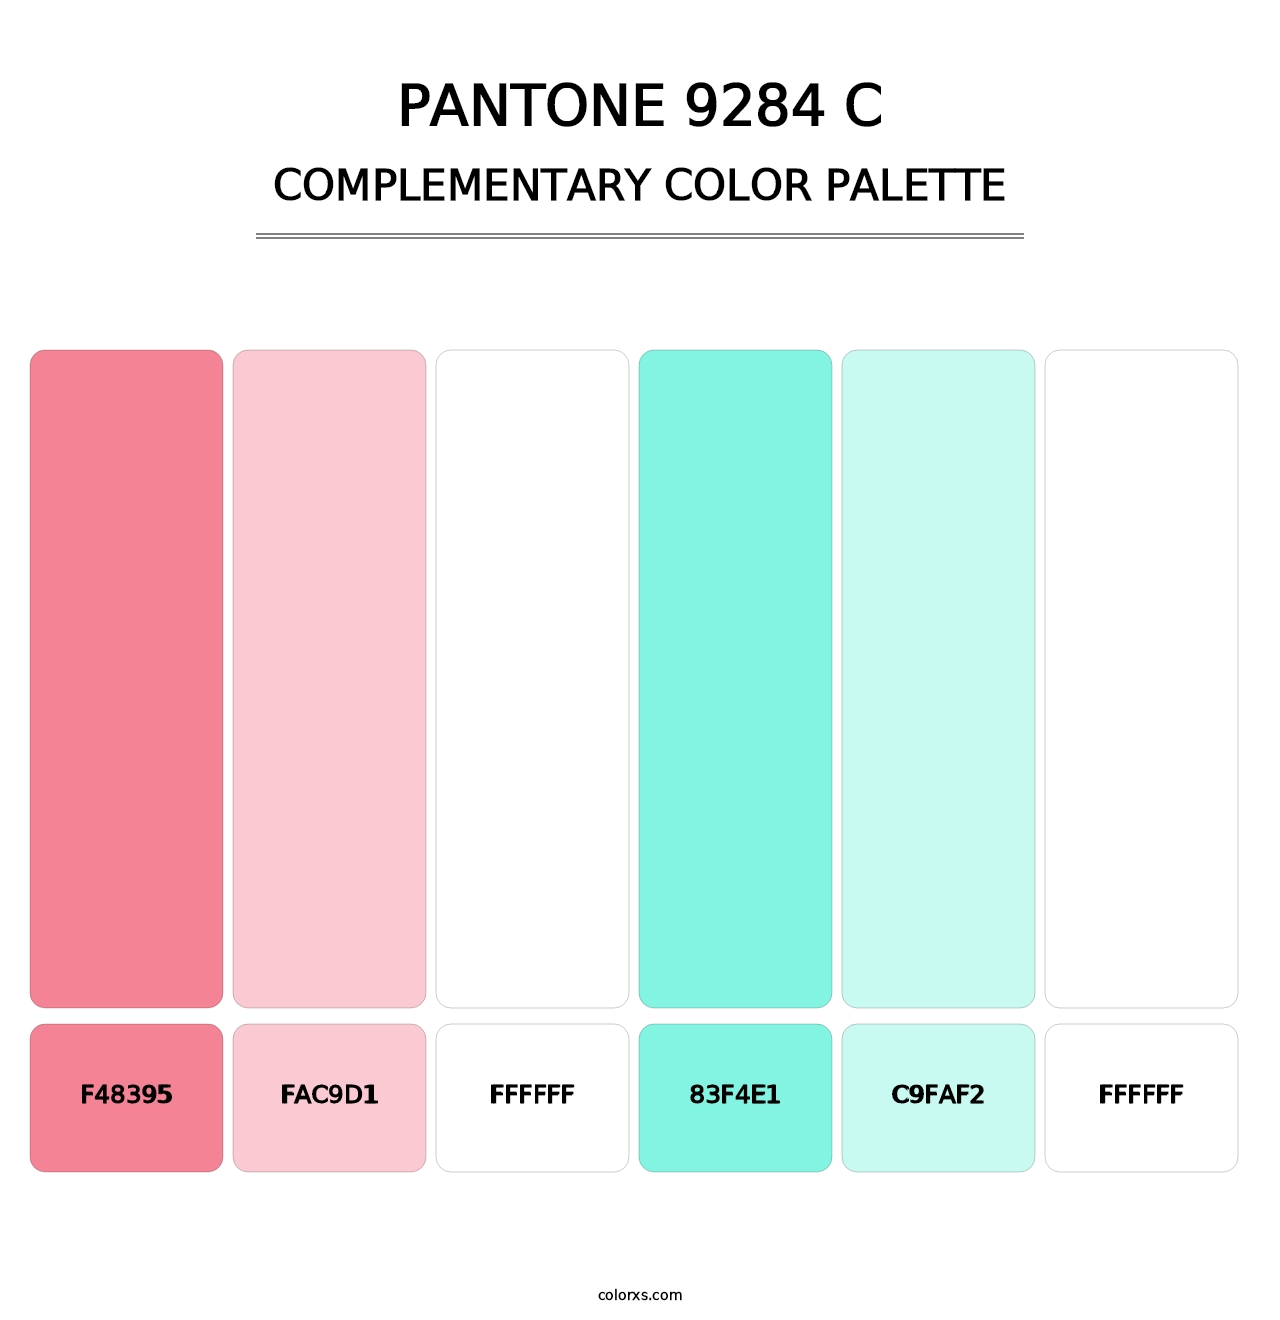 PANTONE 9284 C - Complementary Color Palette